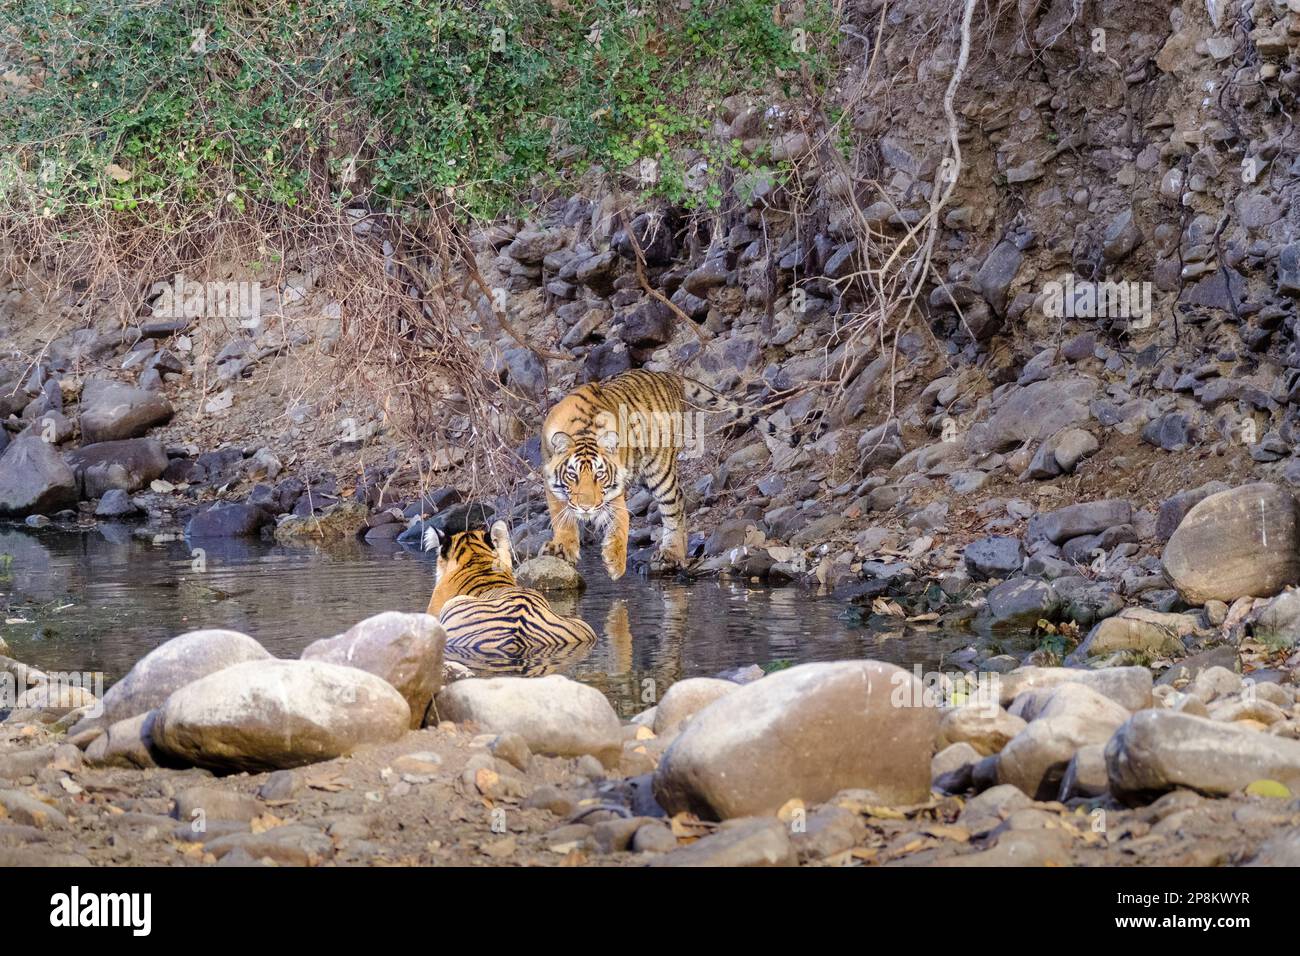 2 Tiger cubs, Panthera tigris, in water playing. 1 cub prepares to jump on its sibling. Ranthambore National Park, Rajasthan, India Stock Photo